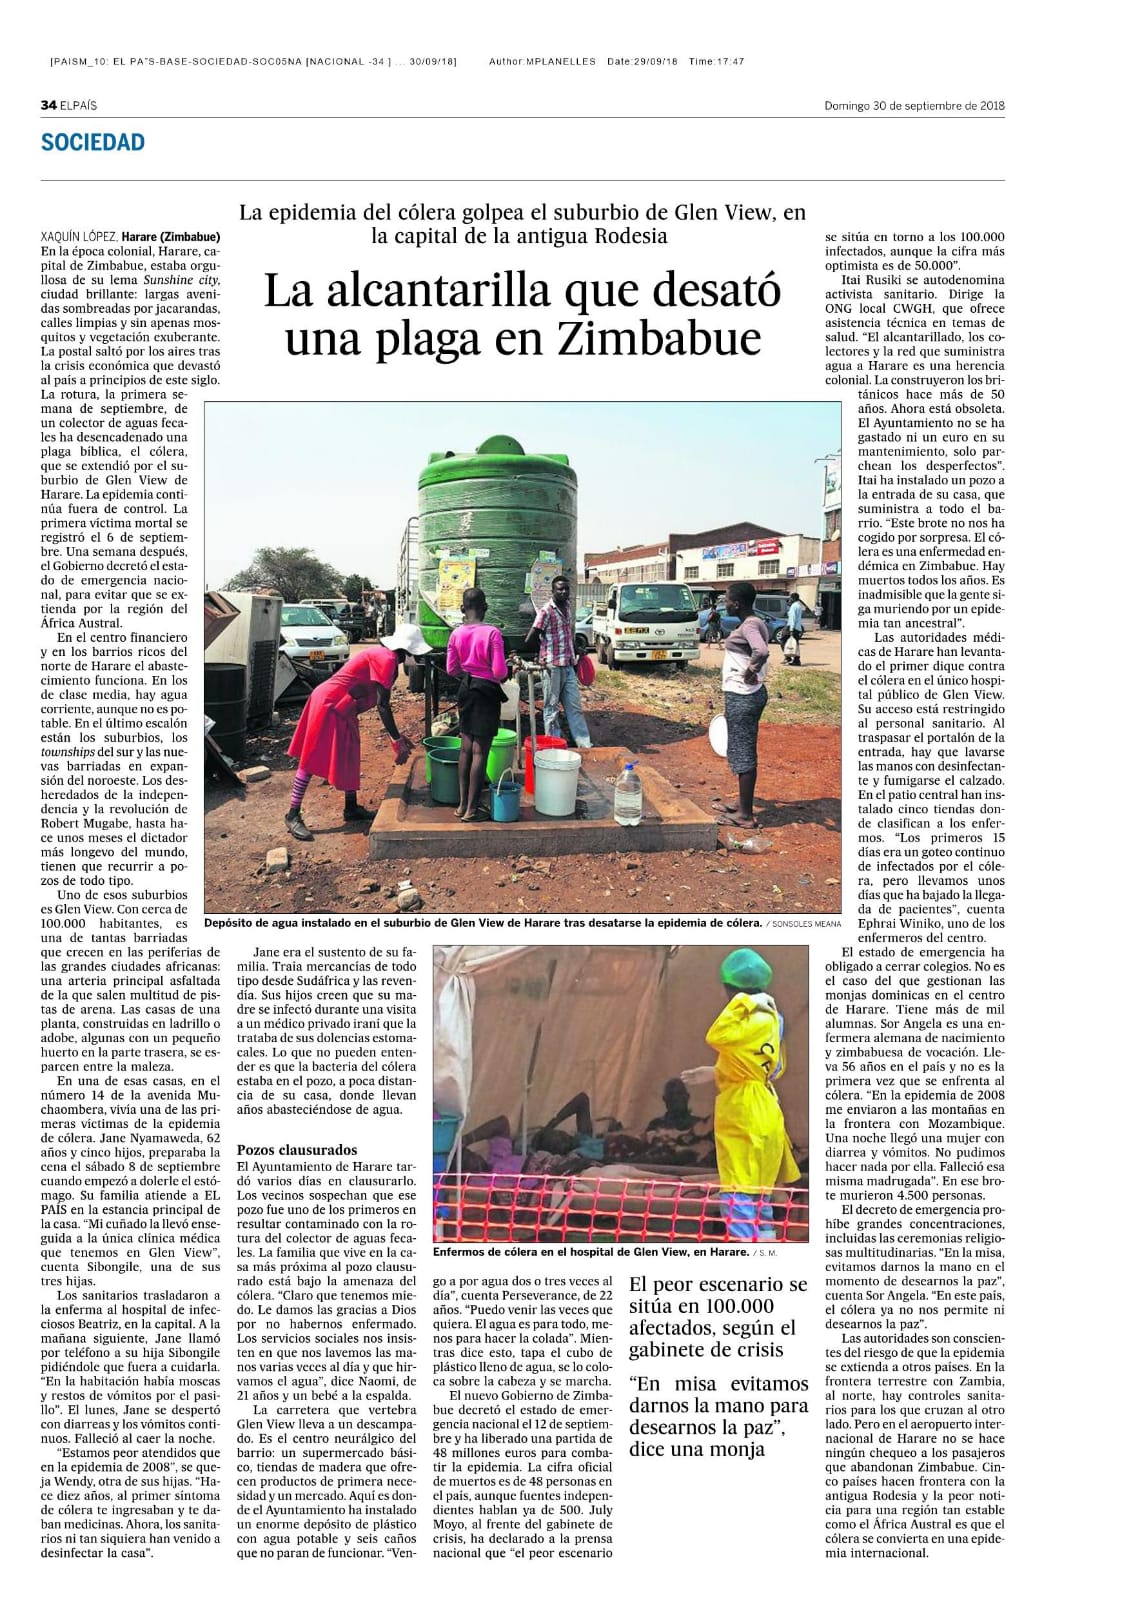 Reportaje de El País